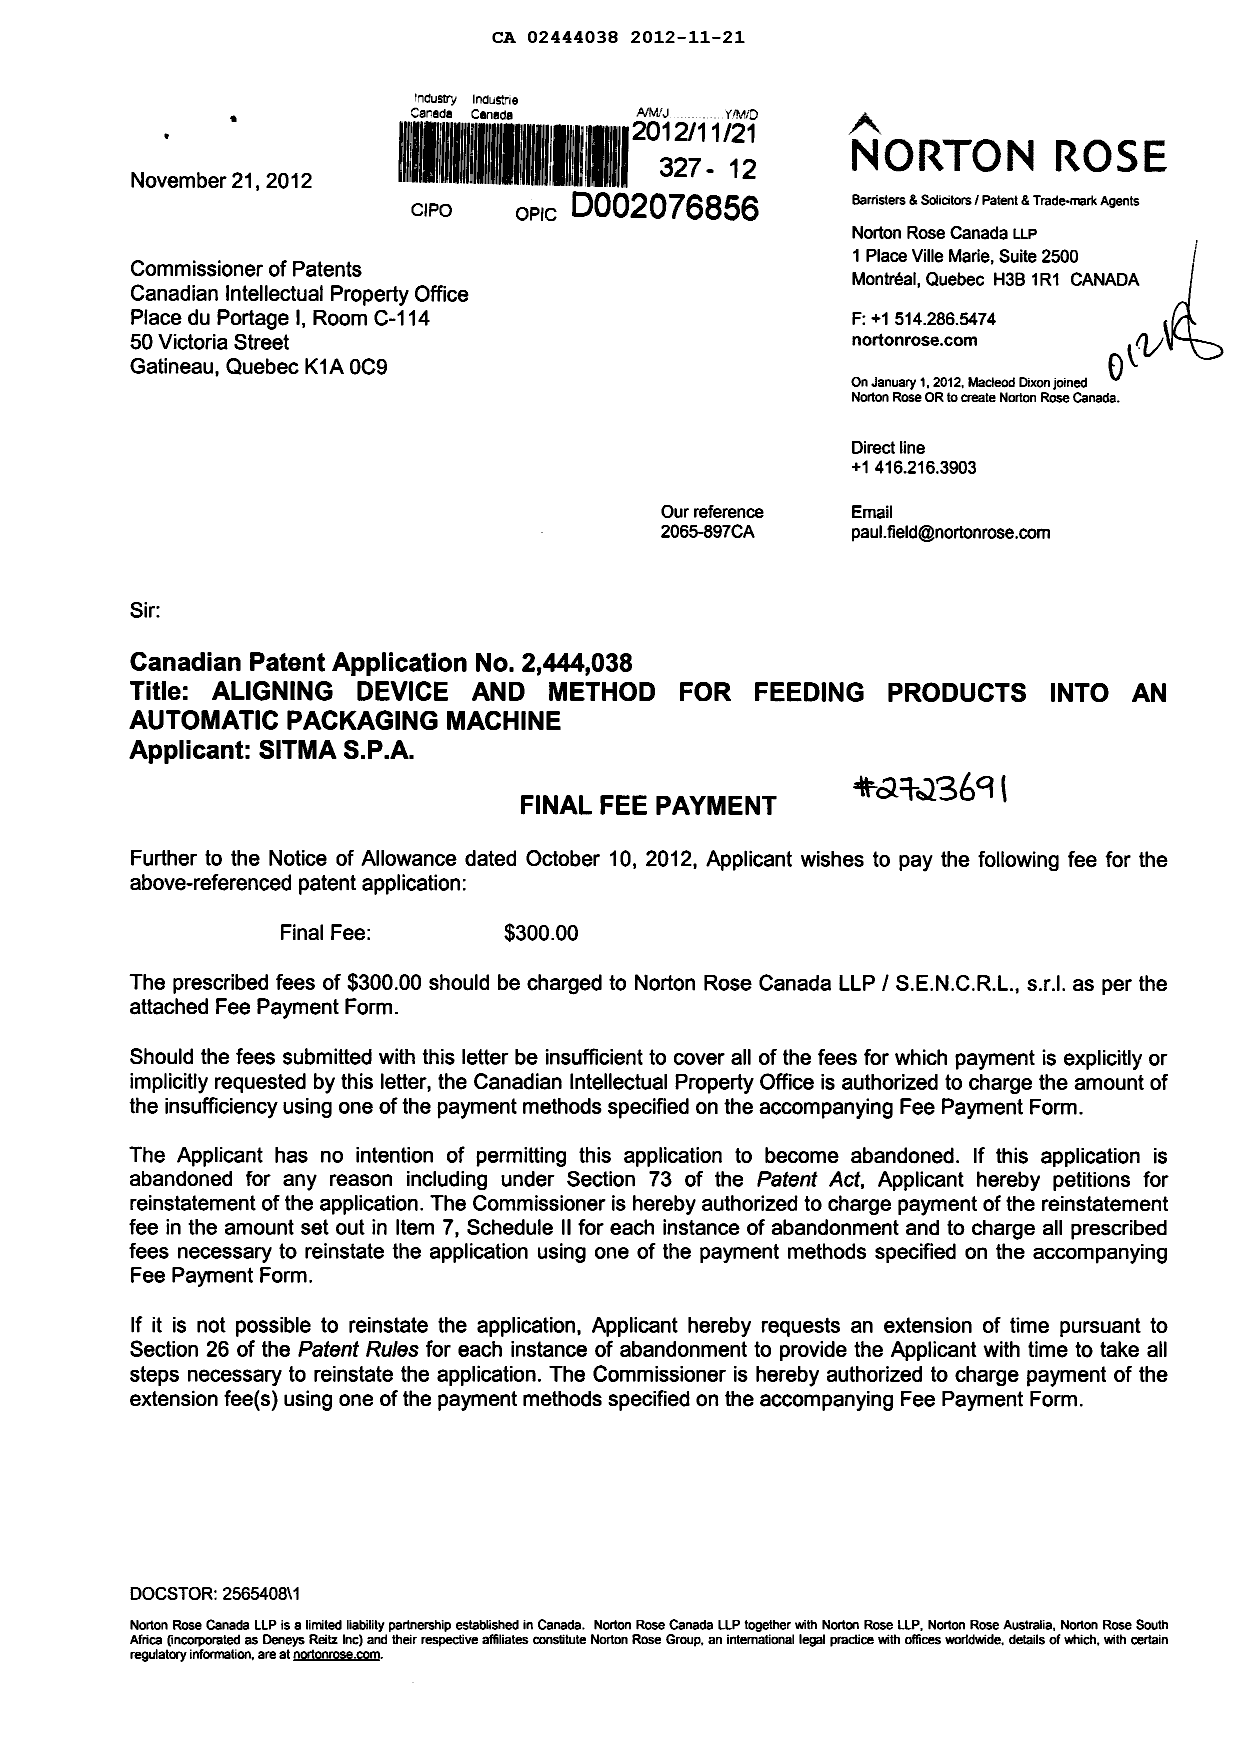 Canadian Patent Document 2444038. Correspondence 20121121. Image 1 of 2